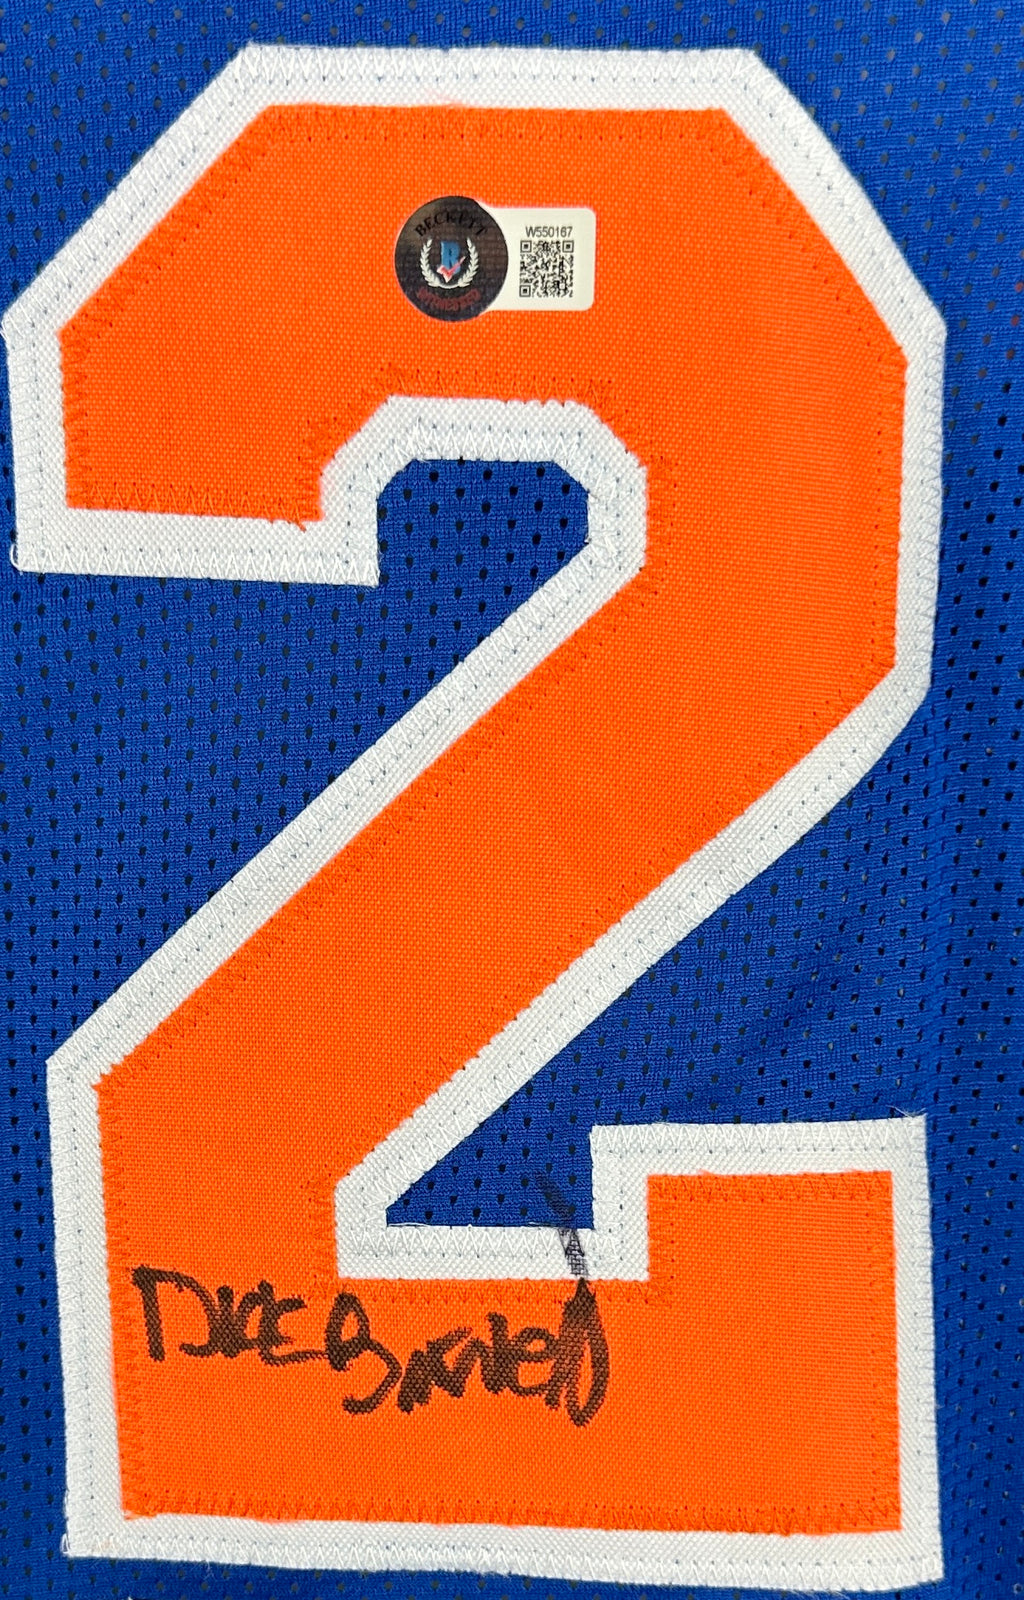 Dick Barnett autographed signed jersey NBA New York Knicks JSA COA